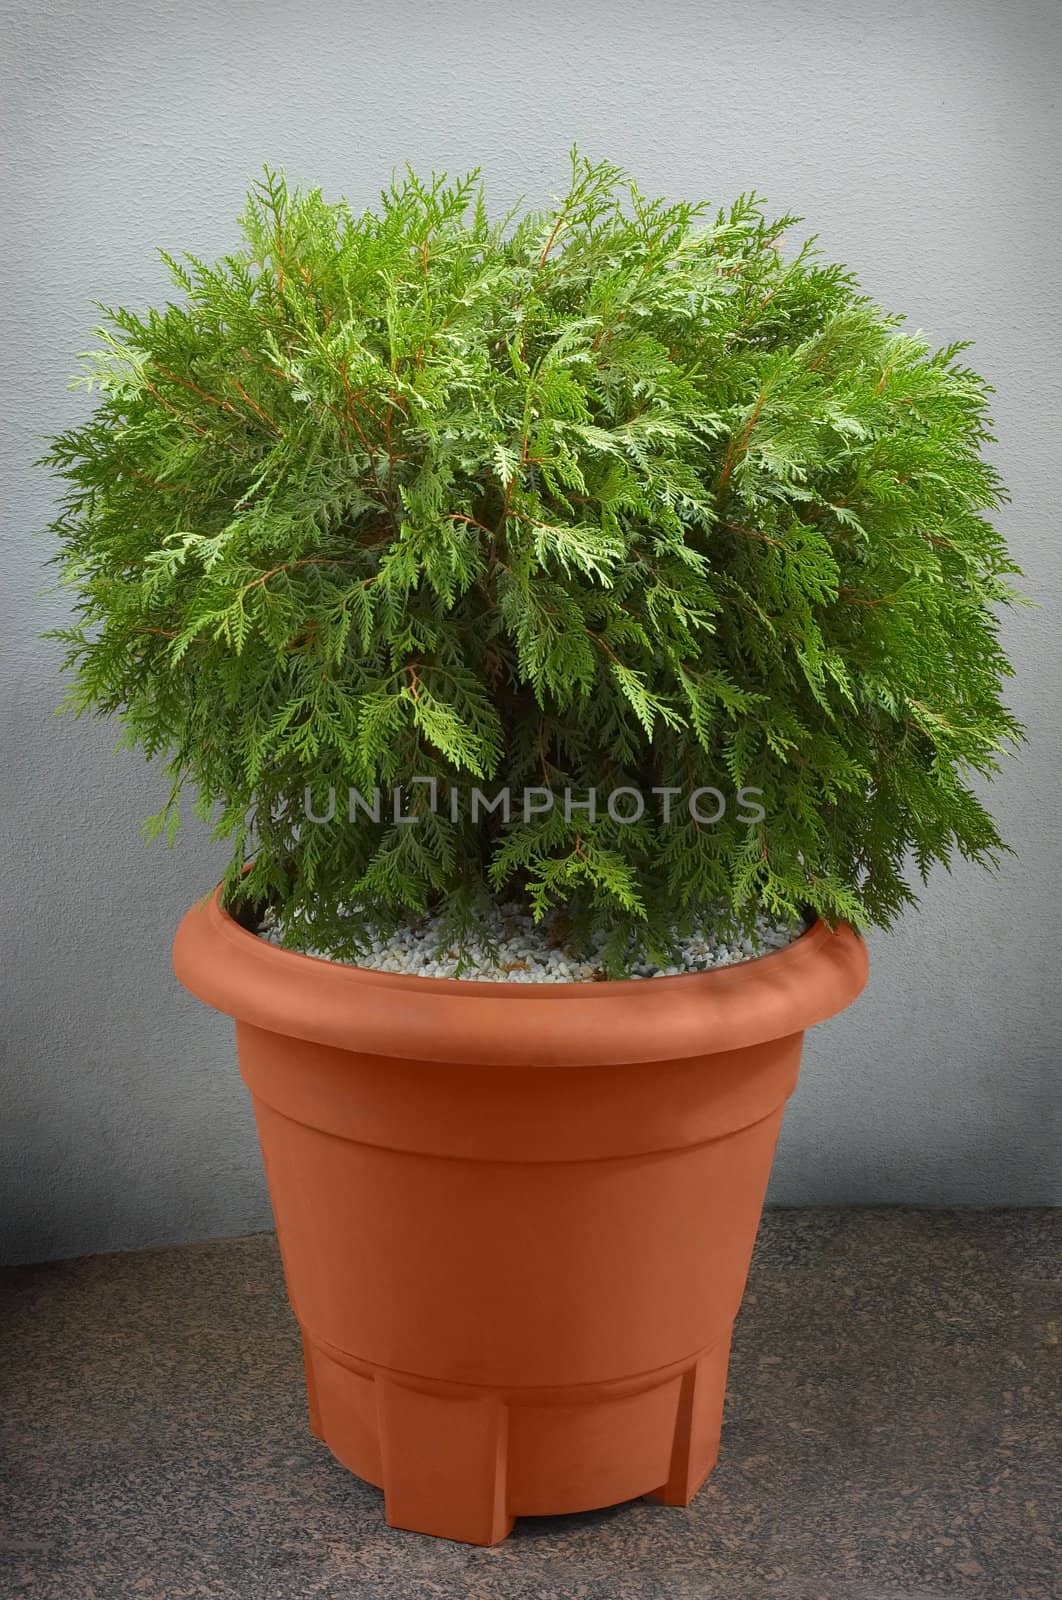 small green thuya tree in brown plastic pot